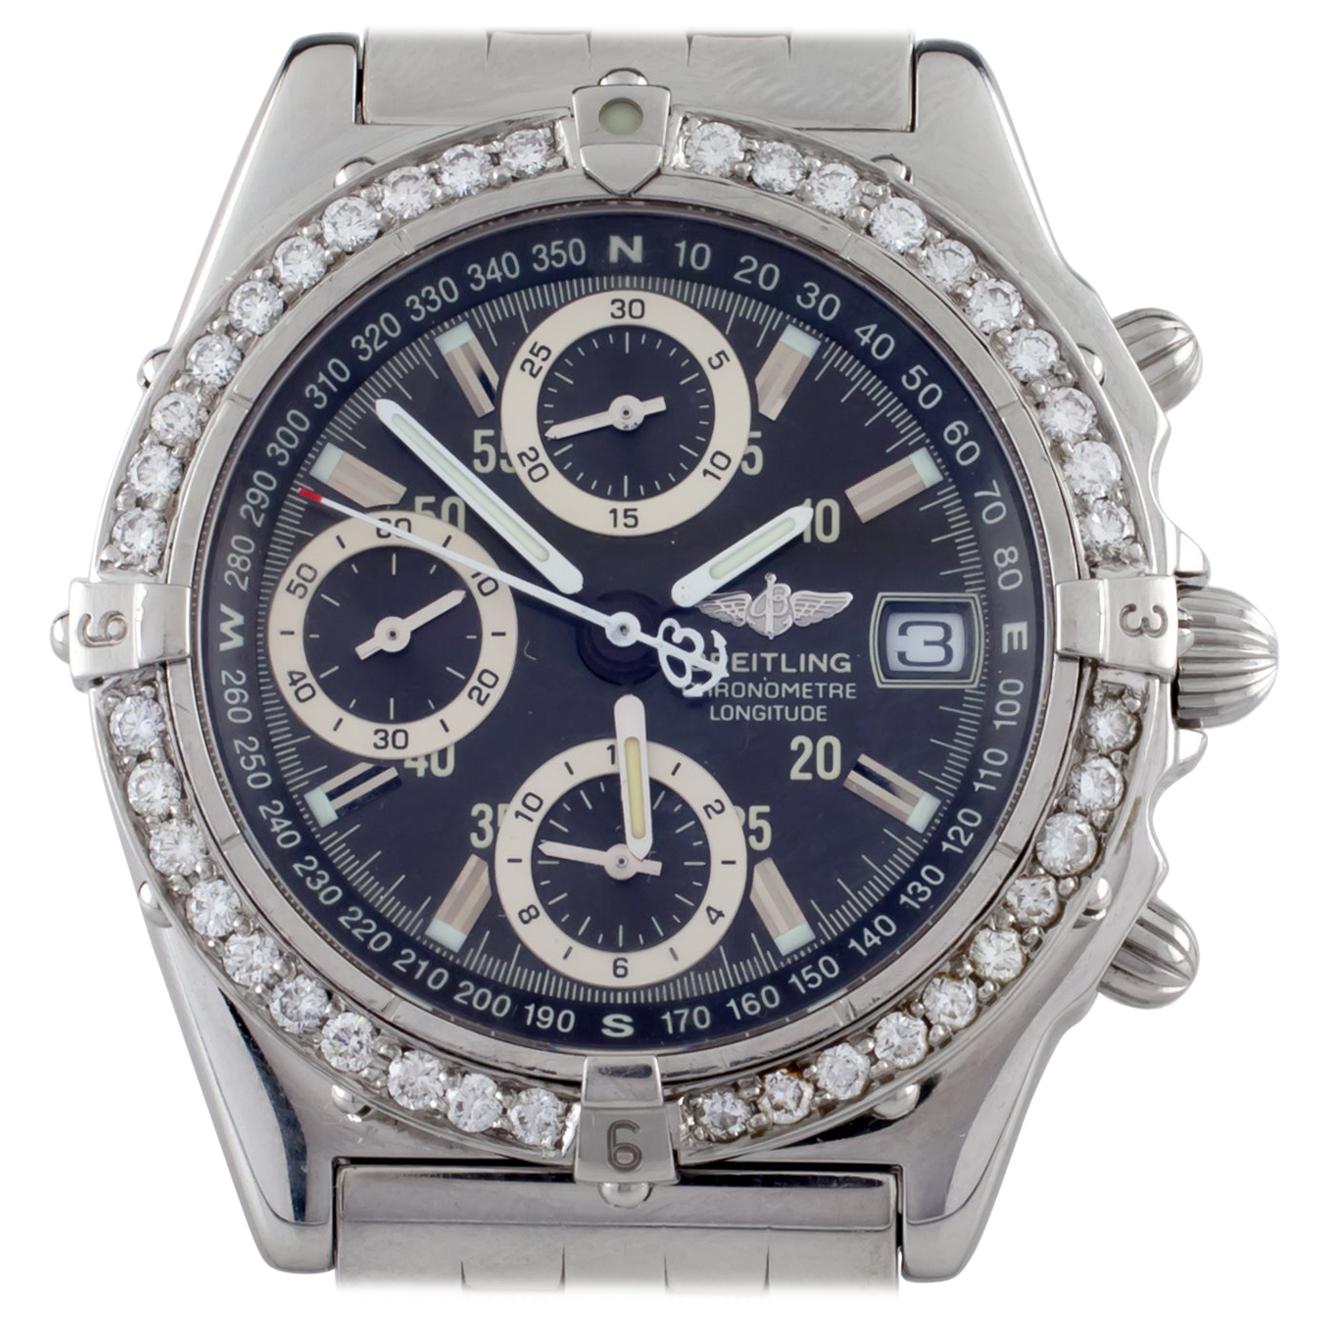 Breitling Chronometre Longitude SS Automatic Men's Watch A20348 w/ Diamond Bezel For Sale